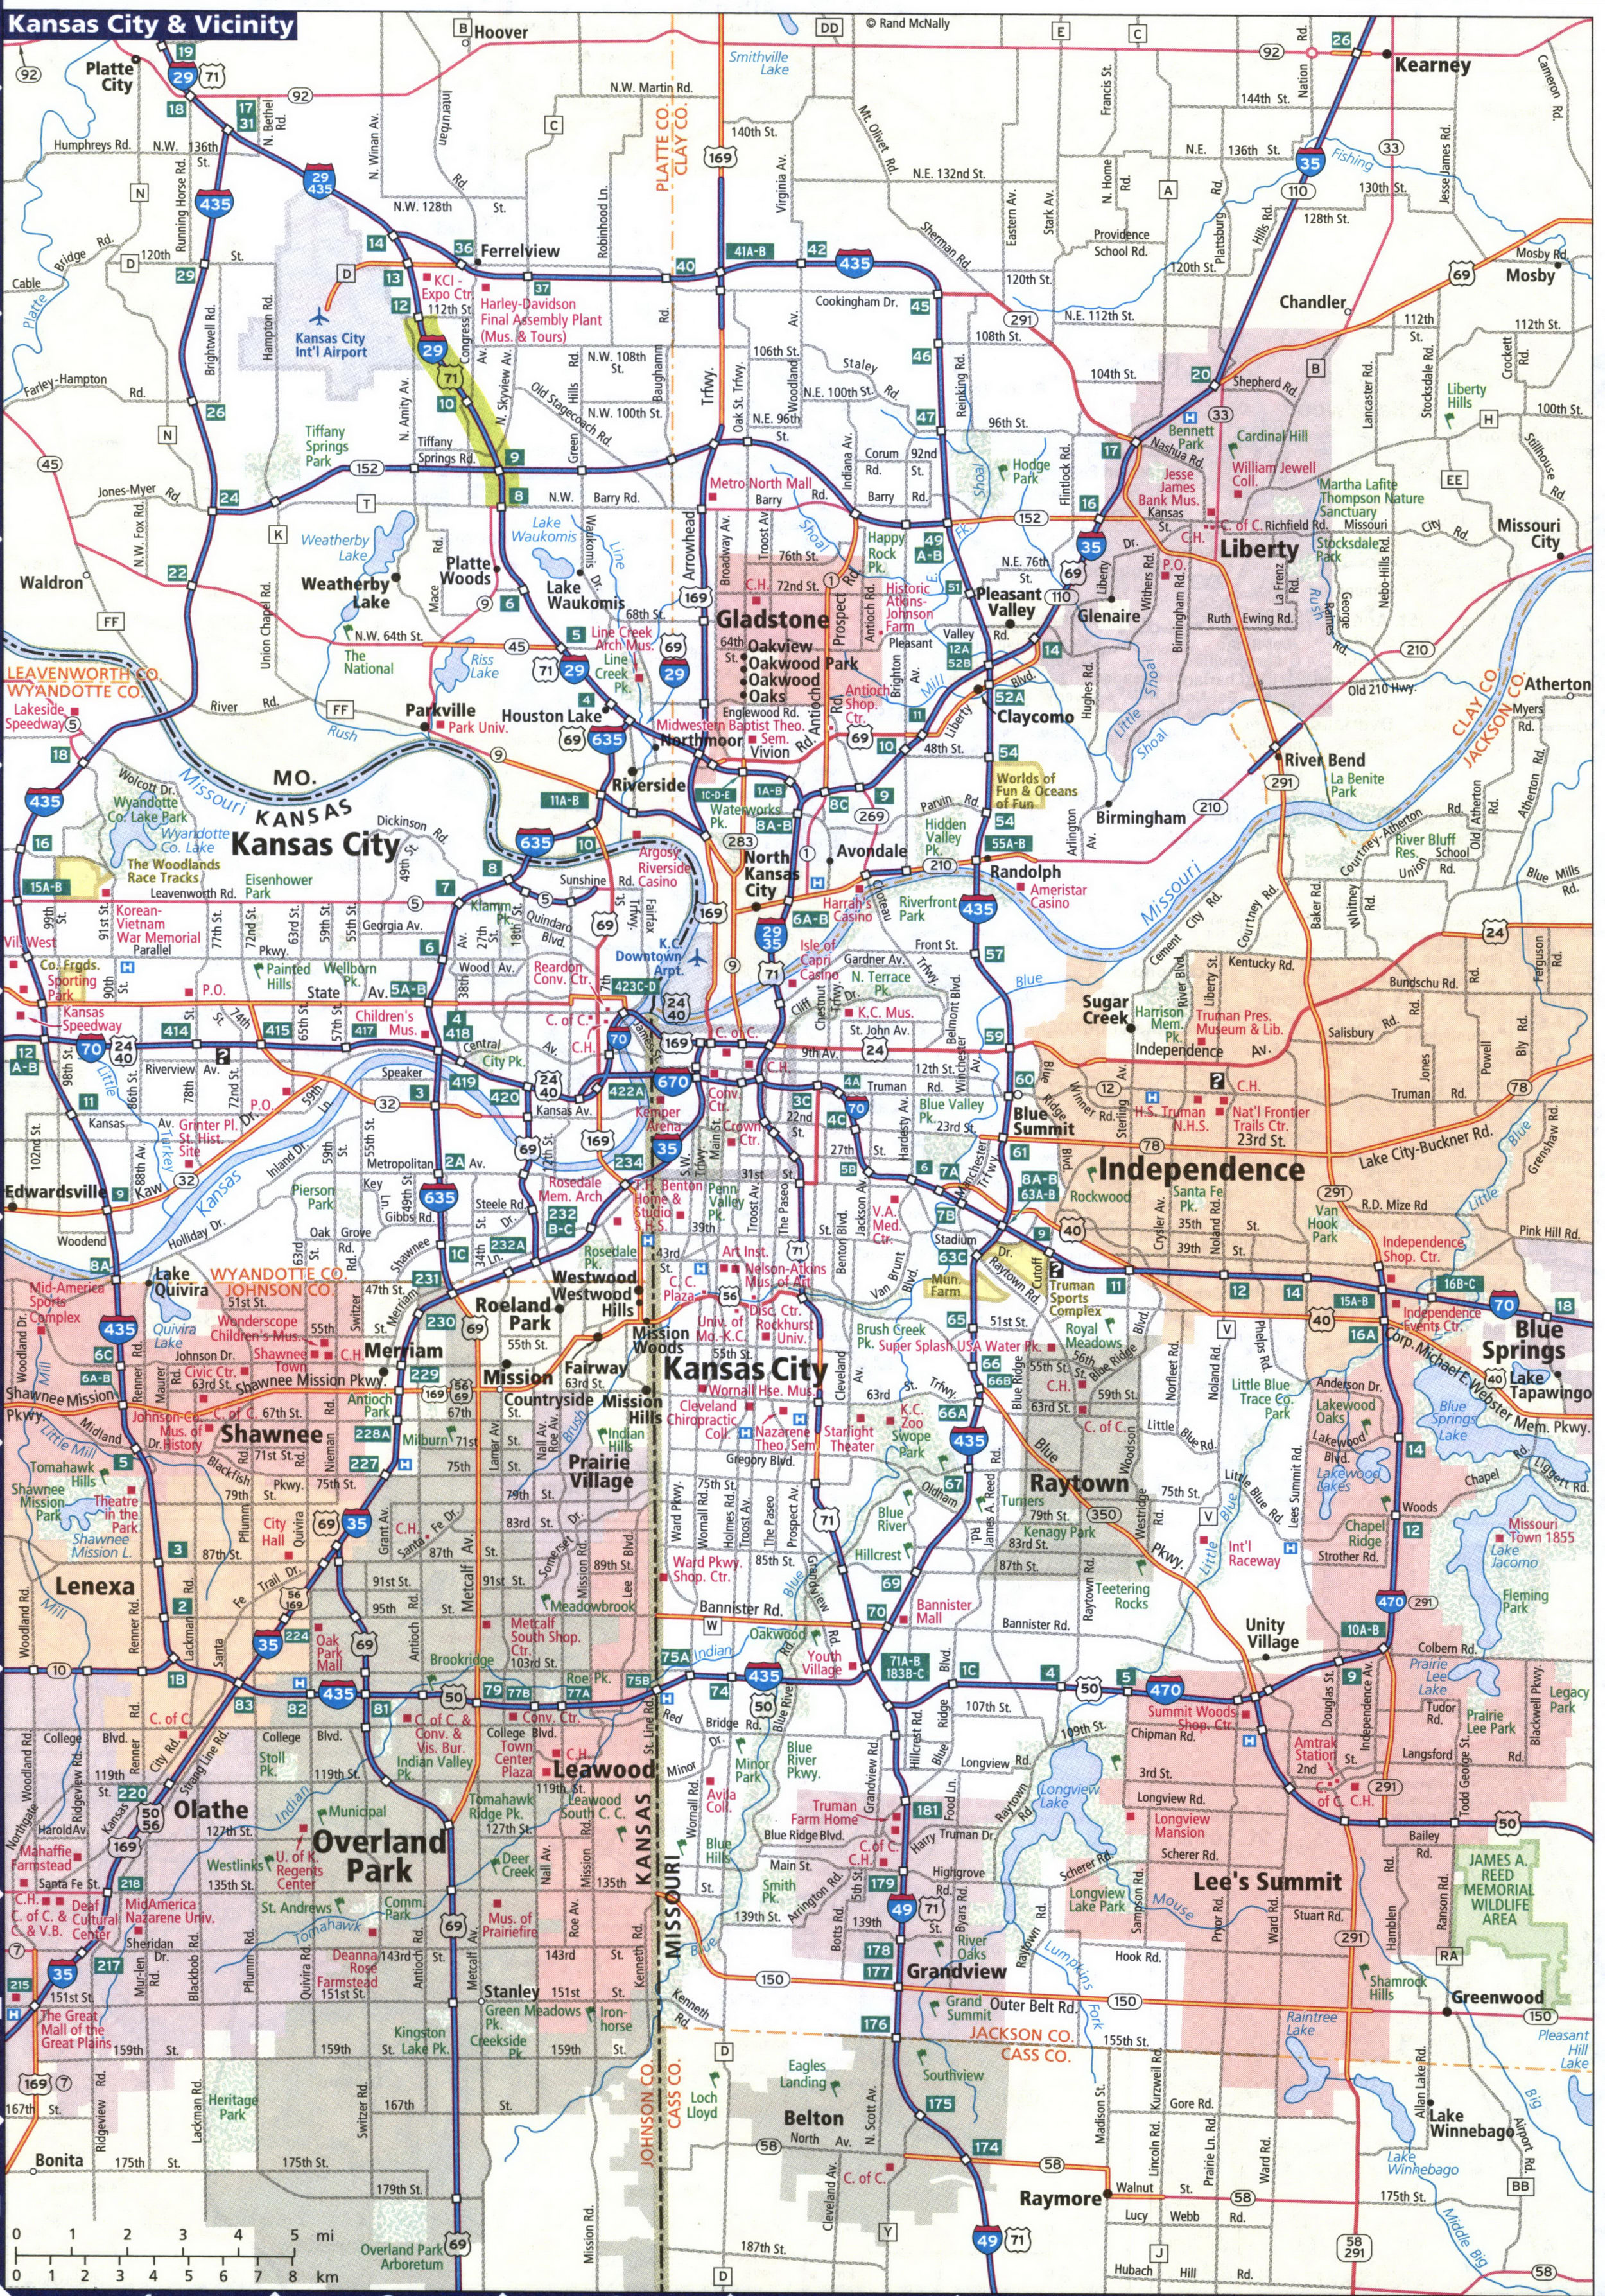 Map of Kansas City and vicinity